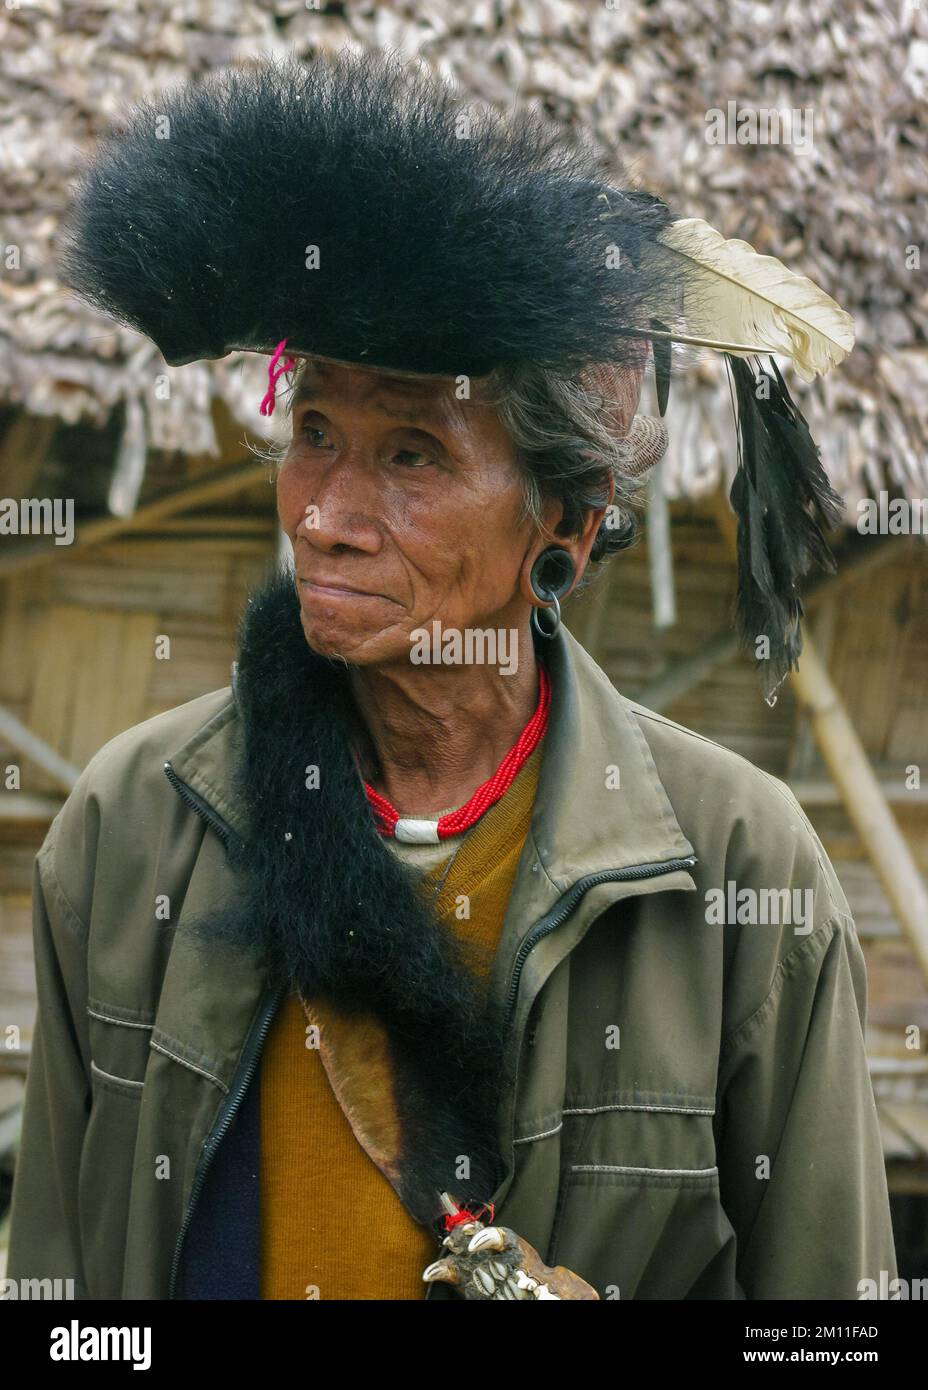 Raga, Arunachal Pradesh, India - 11 14 2010 : Portrait of Nyishi tribe shaman wearing machete knife and traditional headgear with feathers and fur Stock Photo